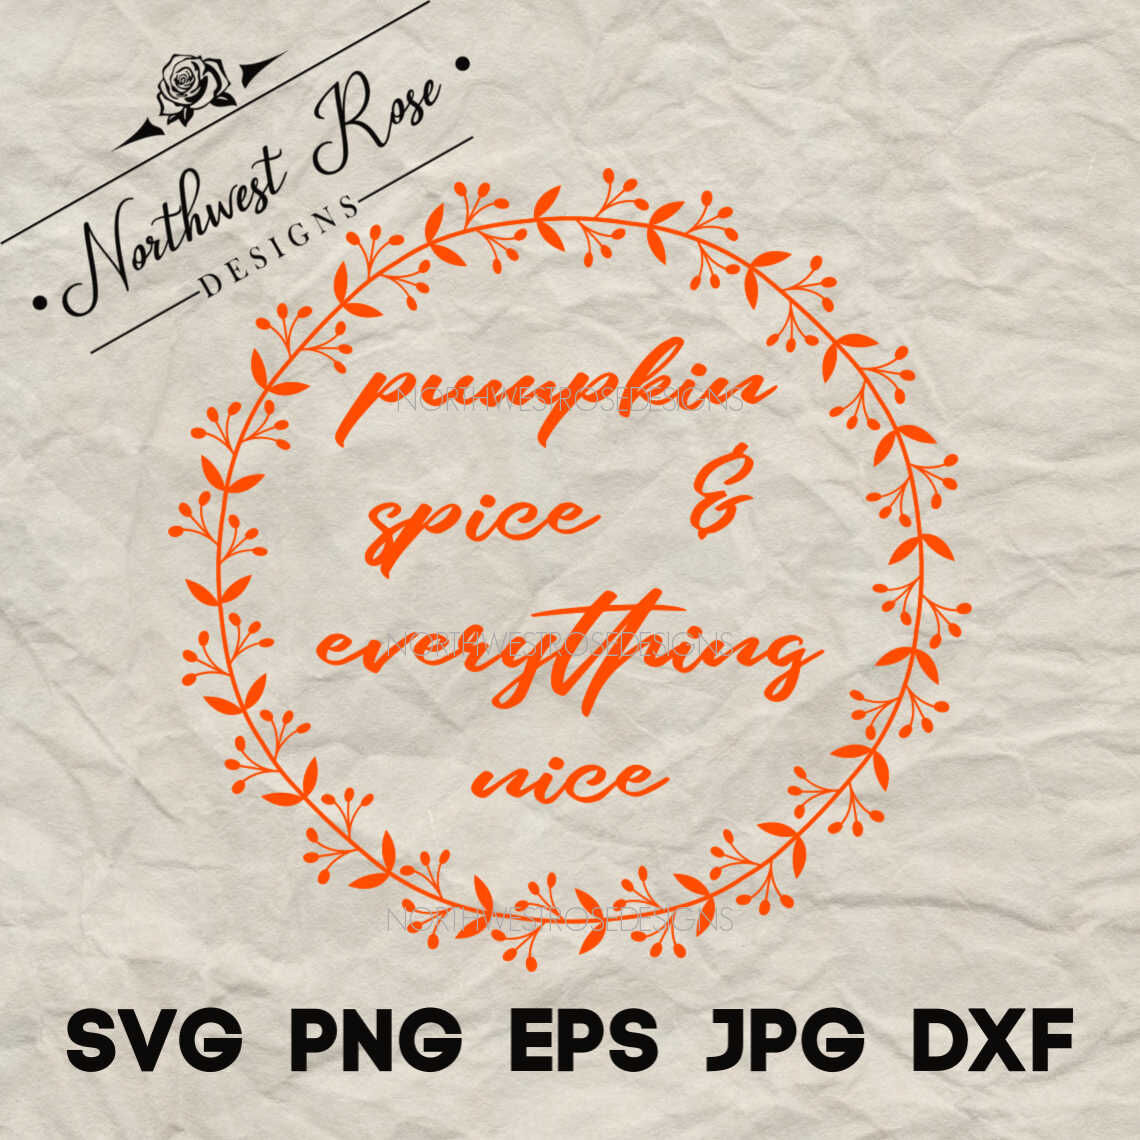 Pumpkin Spice Everything Nice Cut Print File Svg Eps Png Jpg By Northwest Rose Designs Thehungryjpeg Com